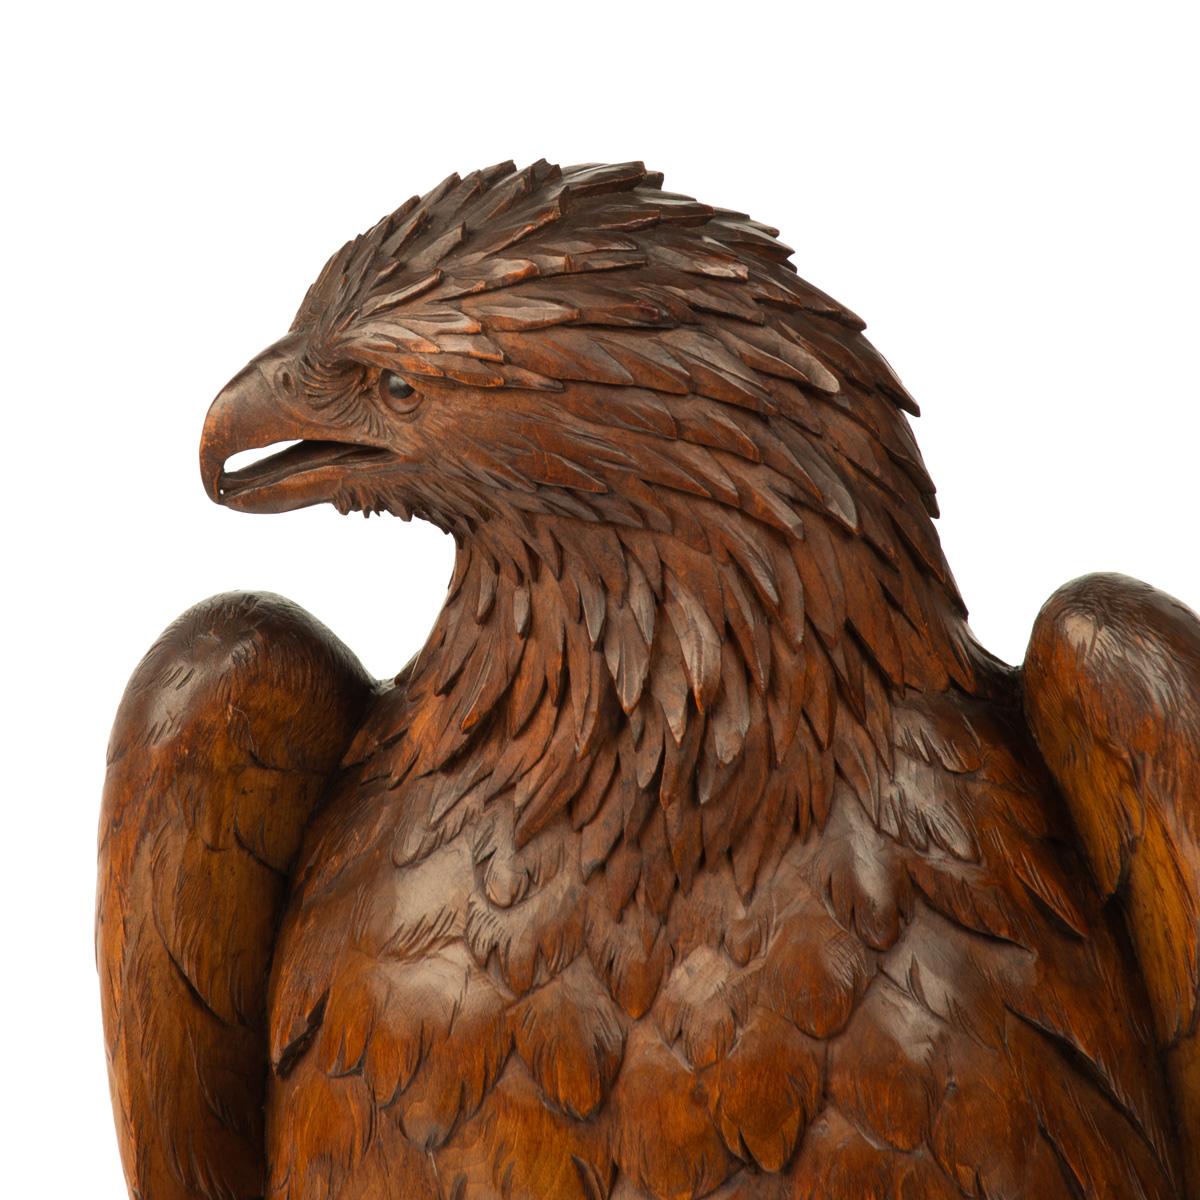 Black Forest linden wooden carving of an eagle